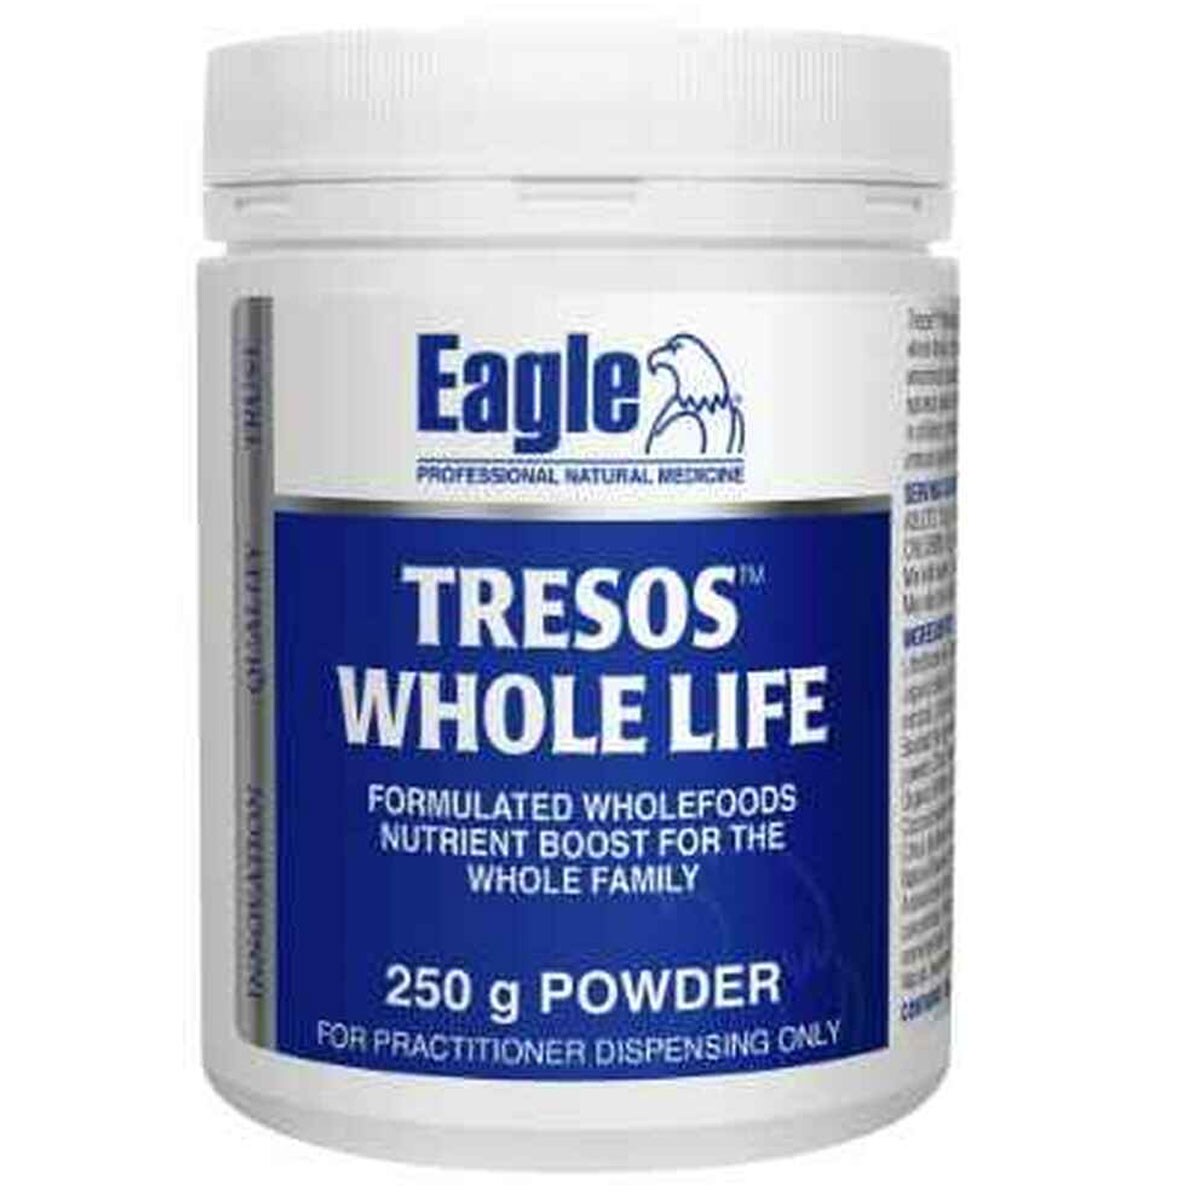 Eagle Tresos Whole Life Powder 250G